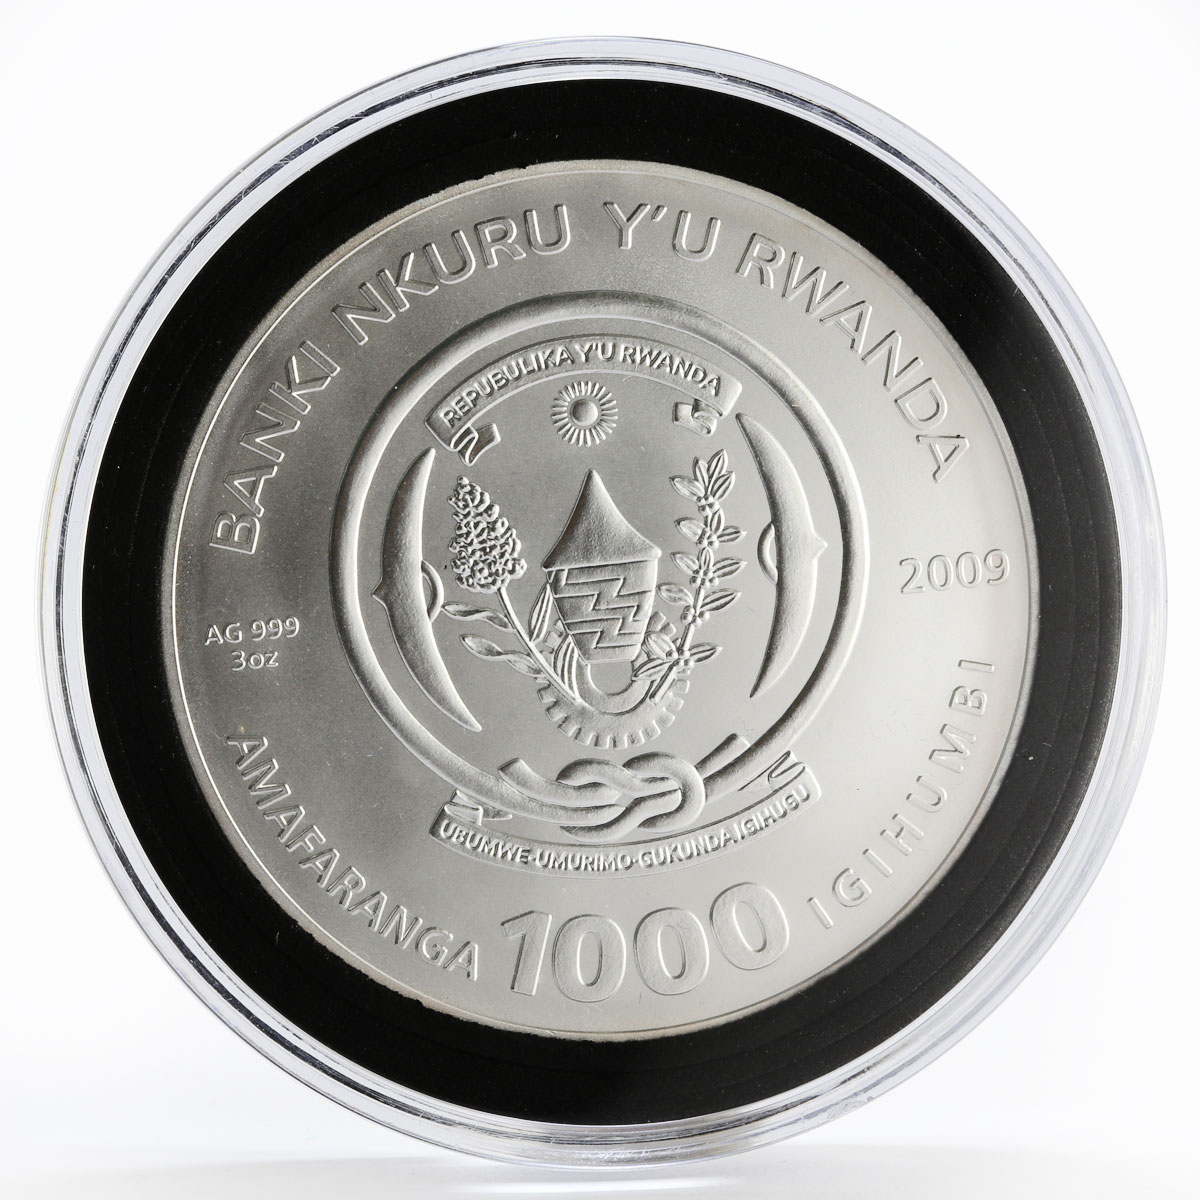 Rwanda 1000 francs Zodiac Taurus bull diamonds silver gilded coin 2009